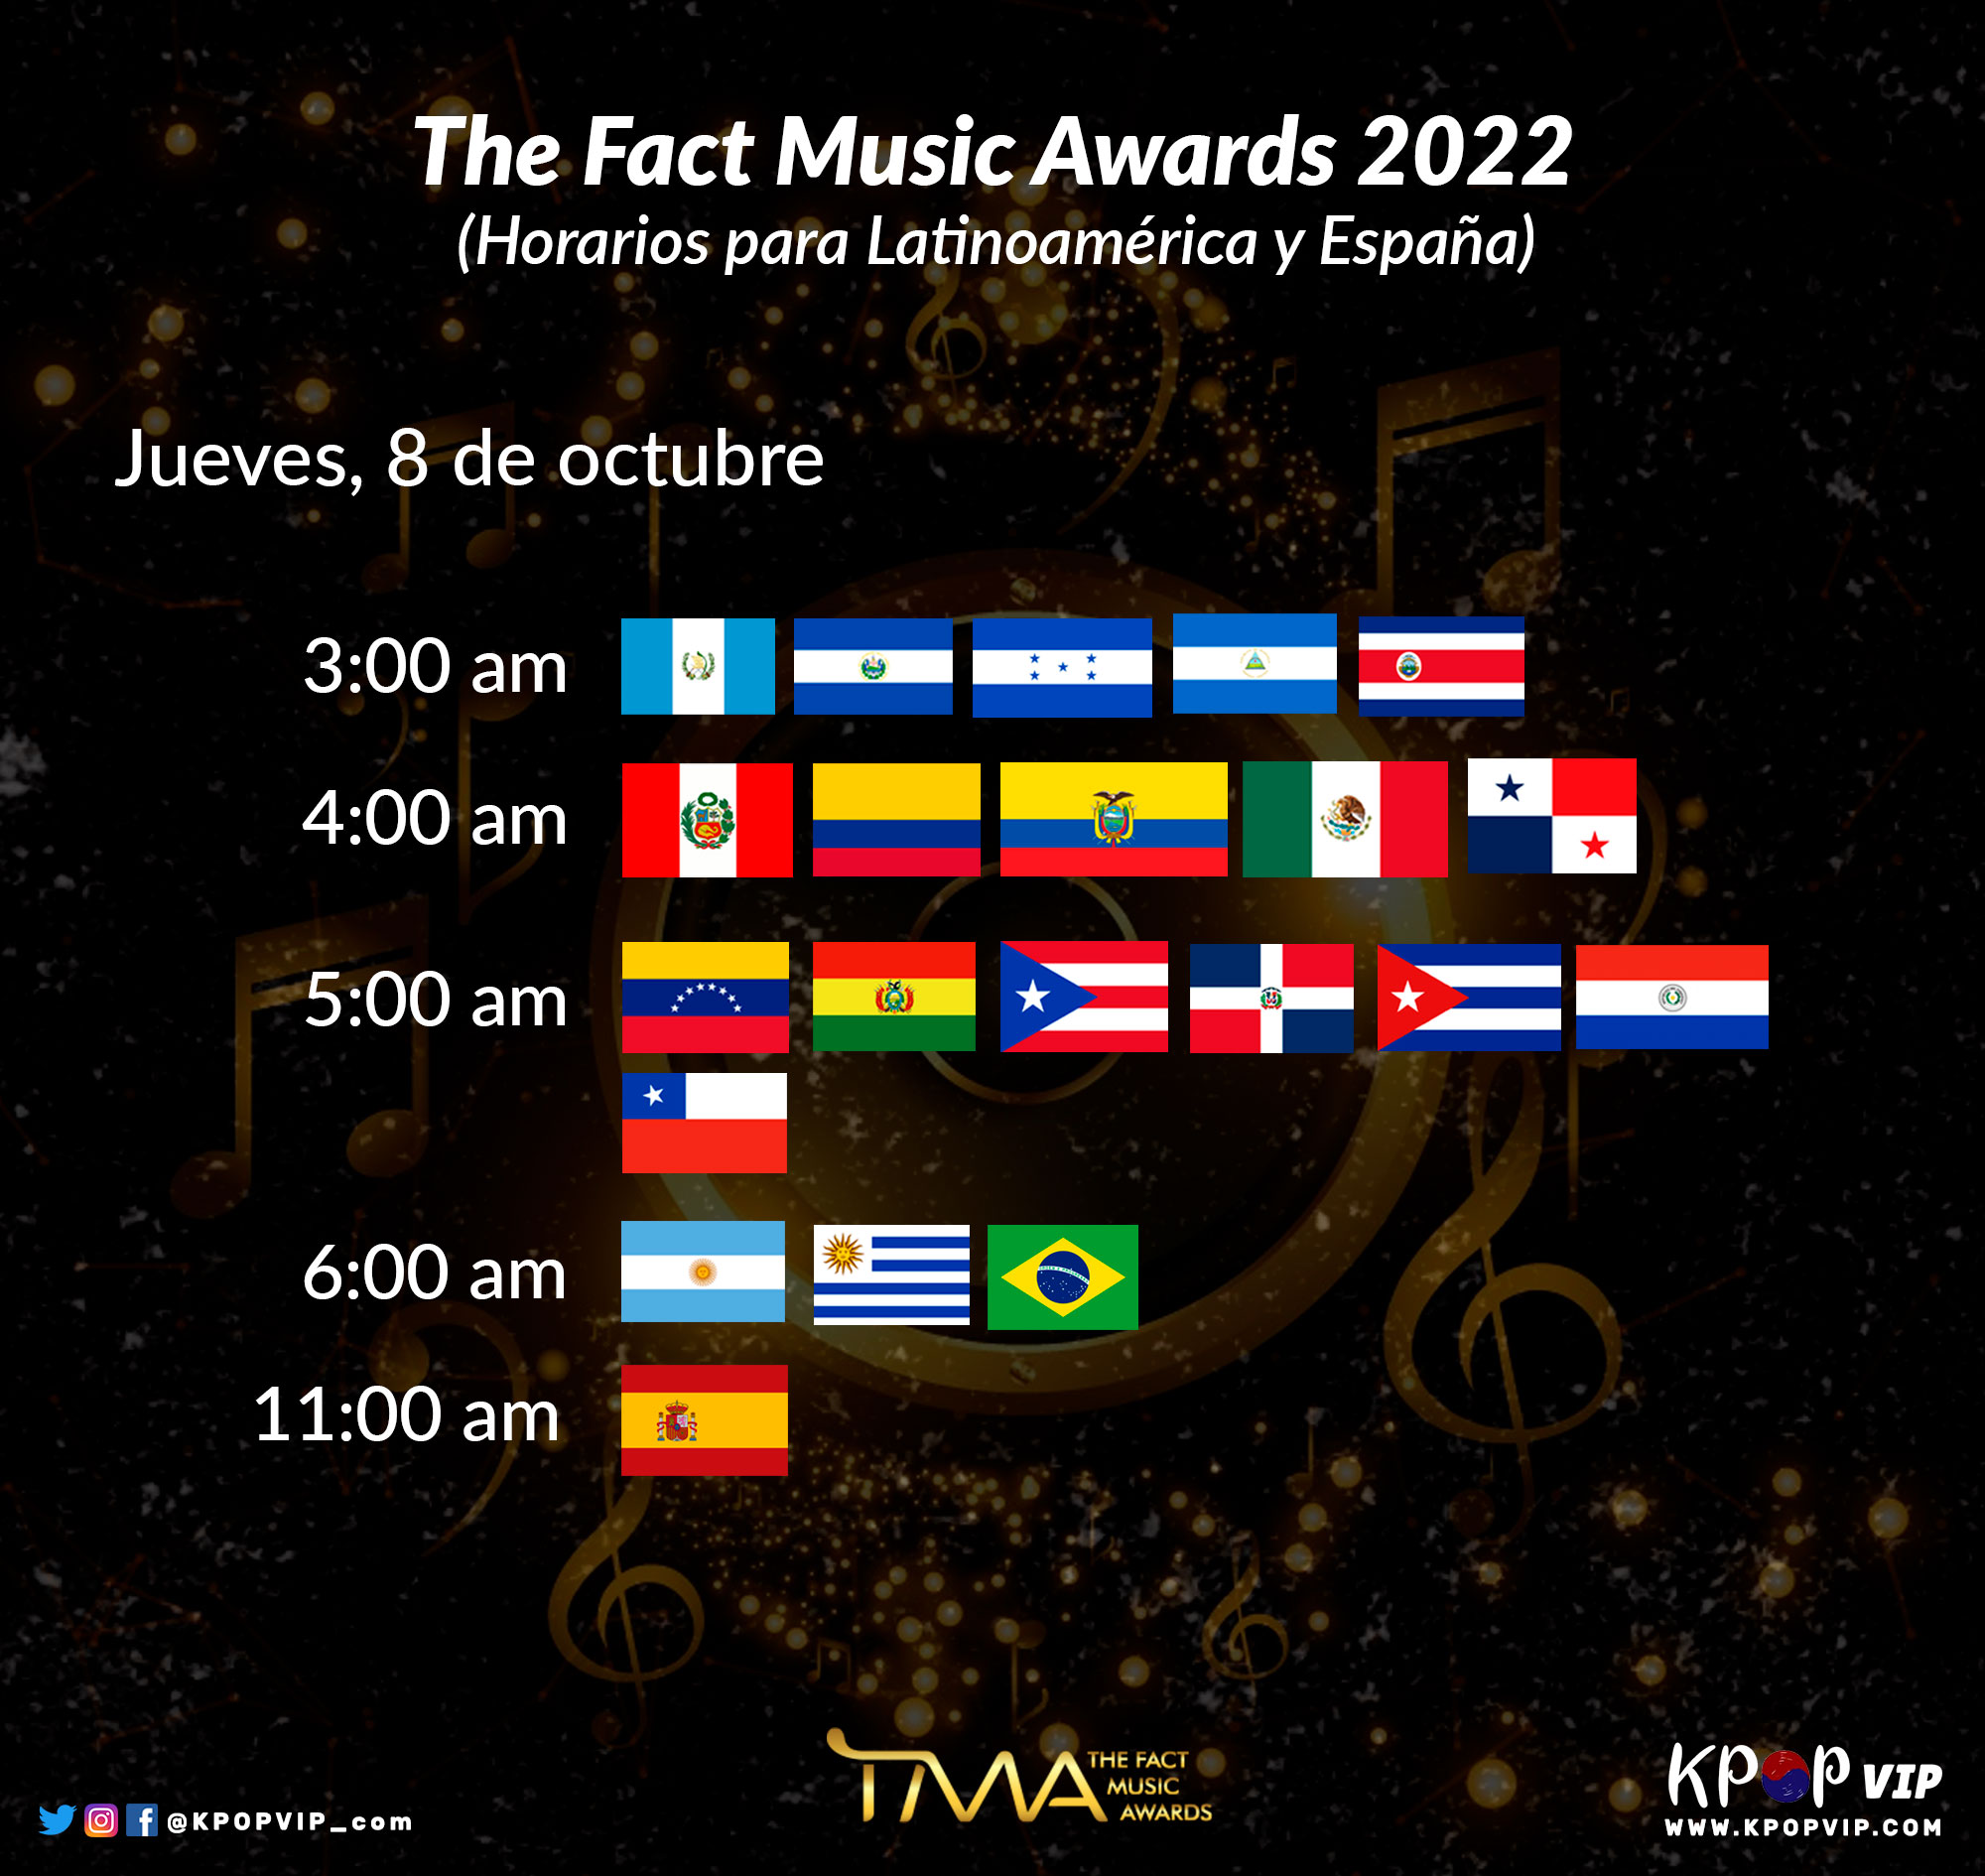 The Fact Music Awards 2022: Line Up, dónde verlo, fecha y horarios para